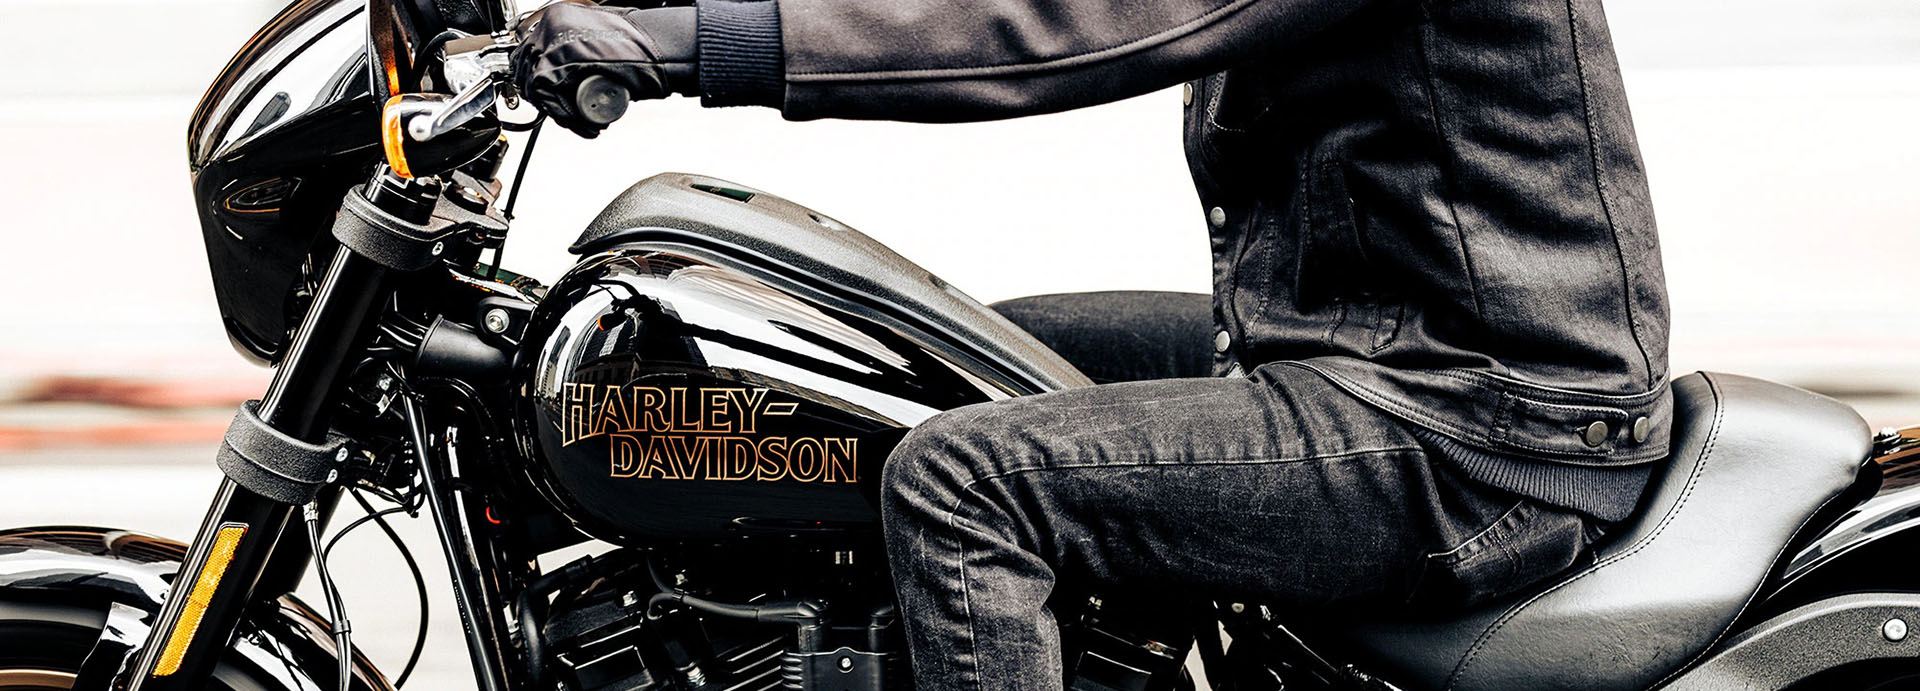 2022 Harley-Davidson Low Rider® S in Baldwin Park, California - Photo 4